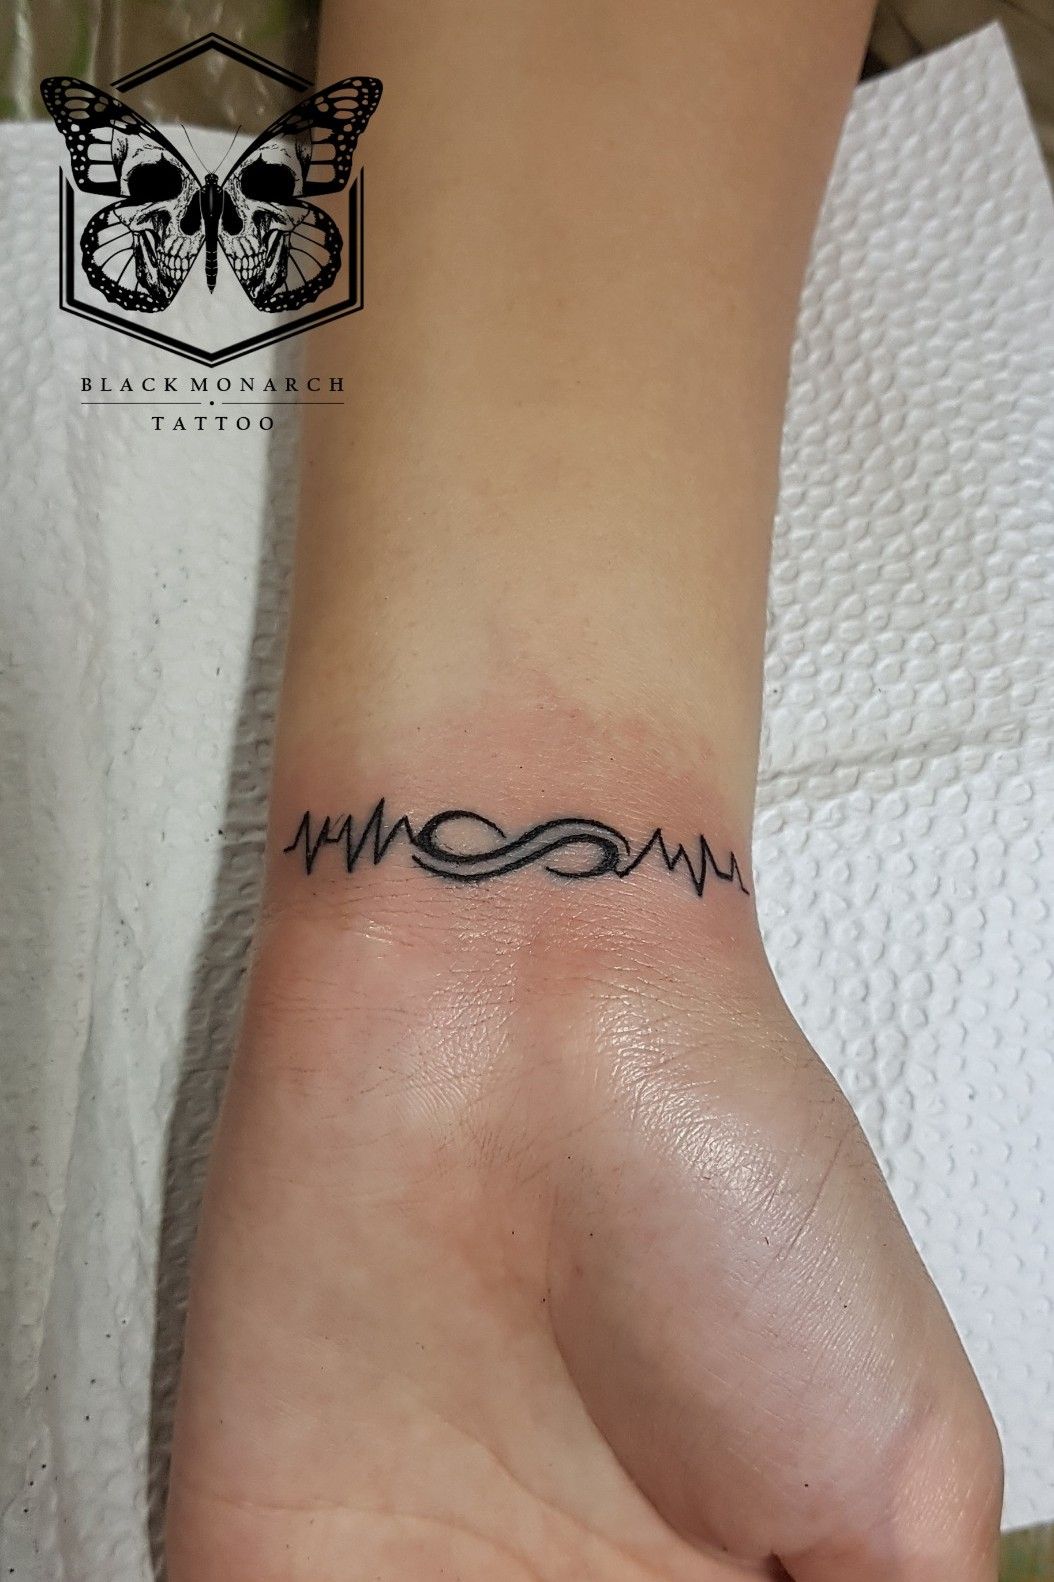 wrist tattoo infinity